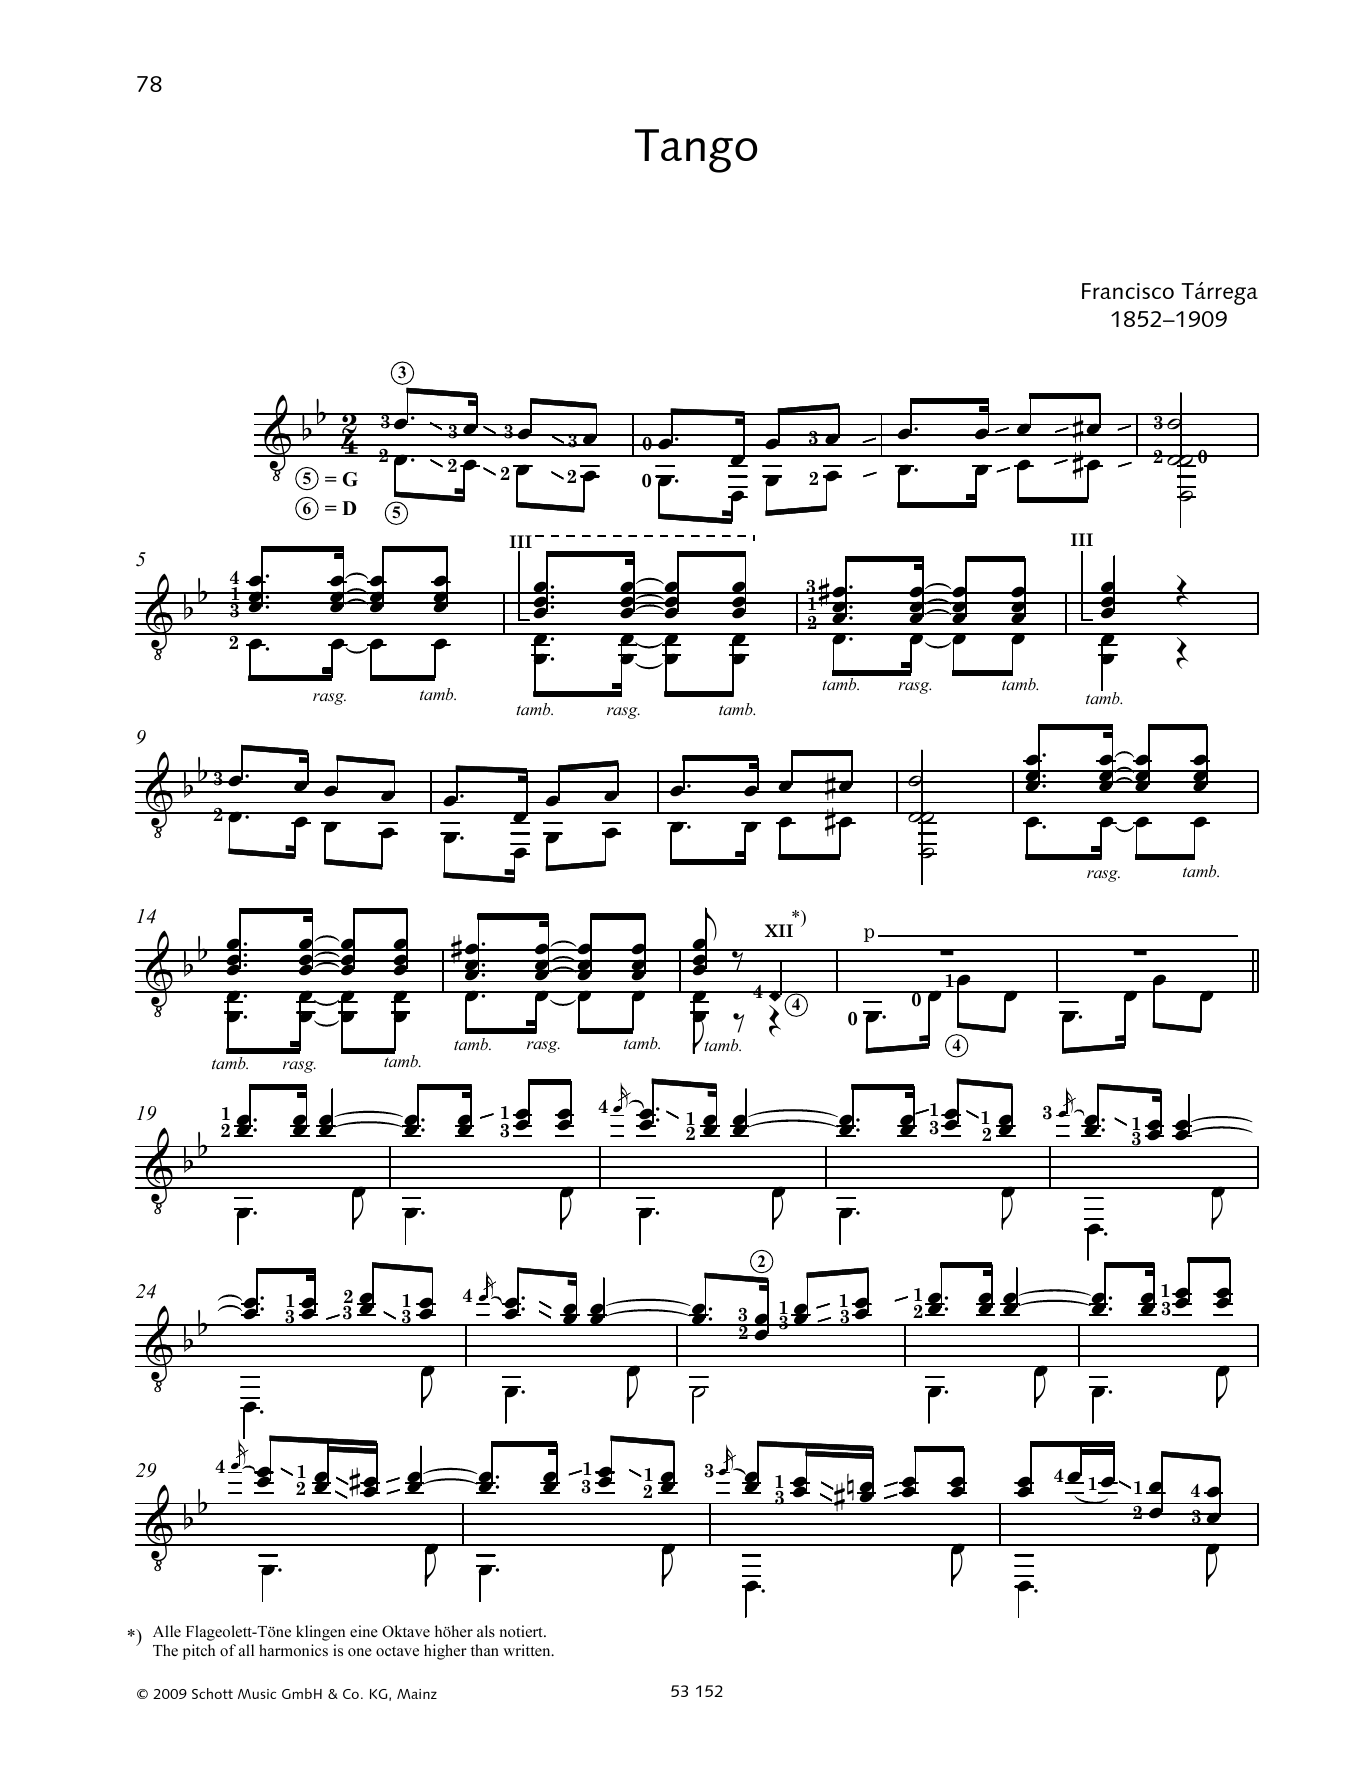 Francisco Tárrega Tango Sheet Music Notes & Chords for Solo Guitar - Download or Print PDF